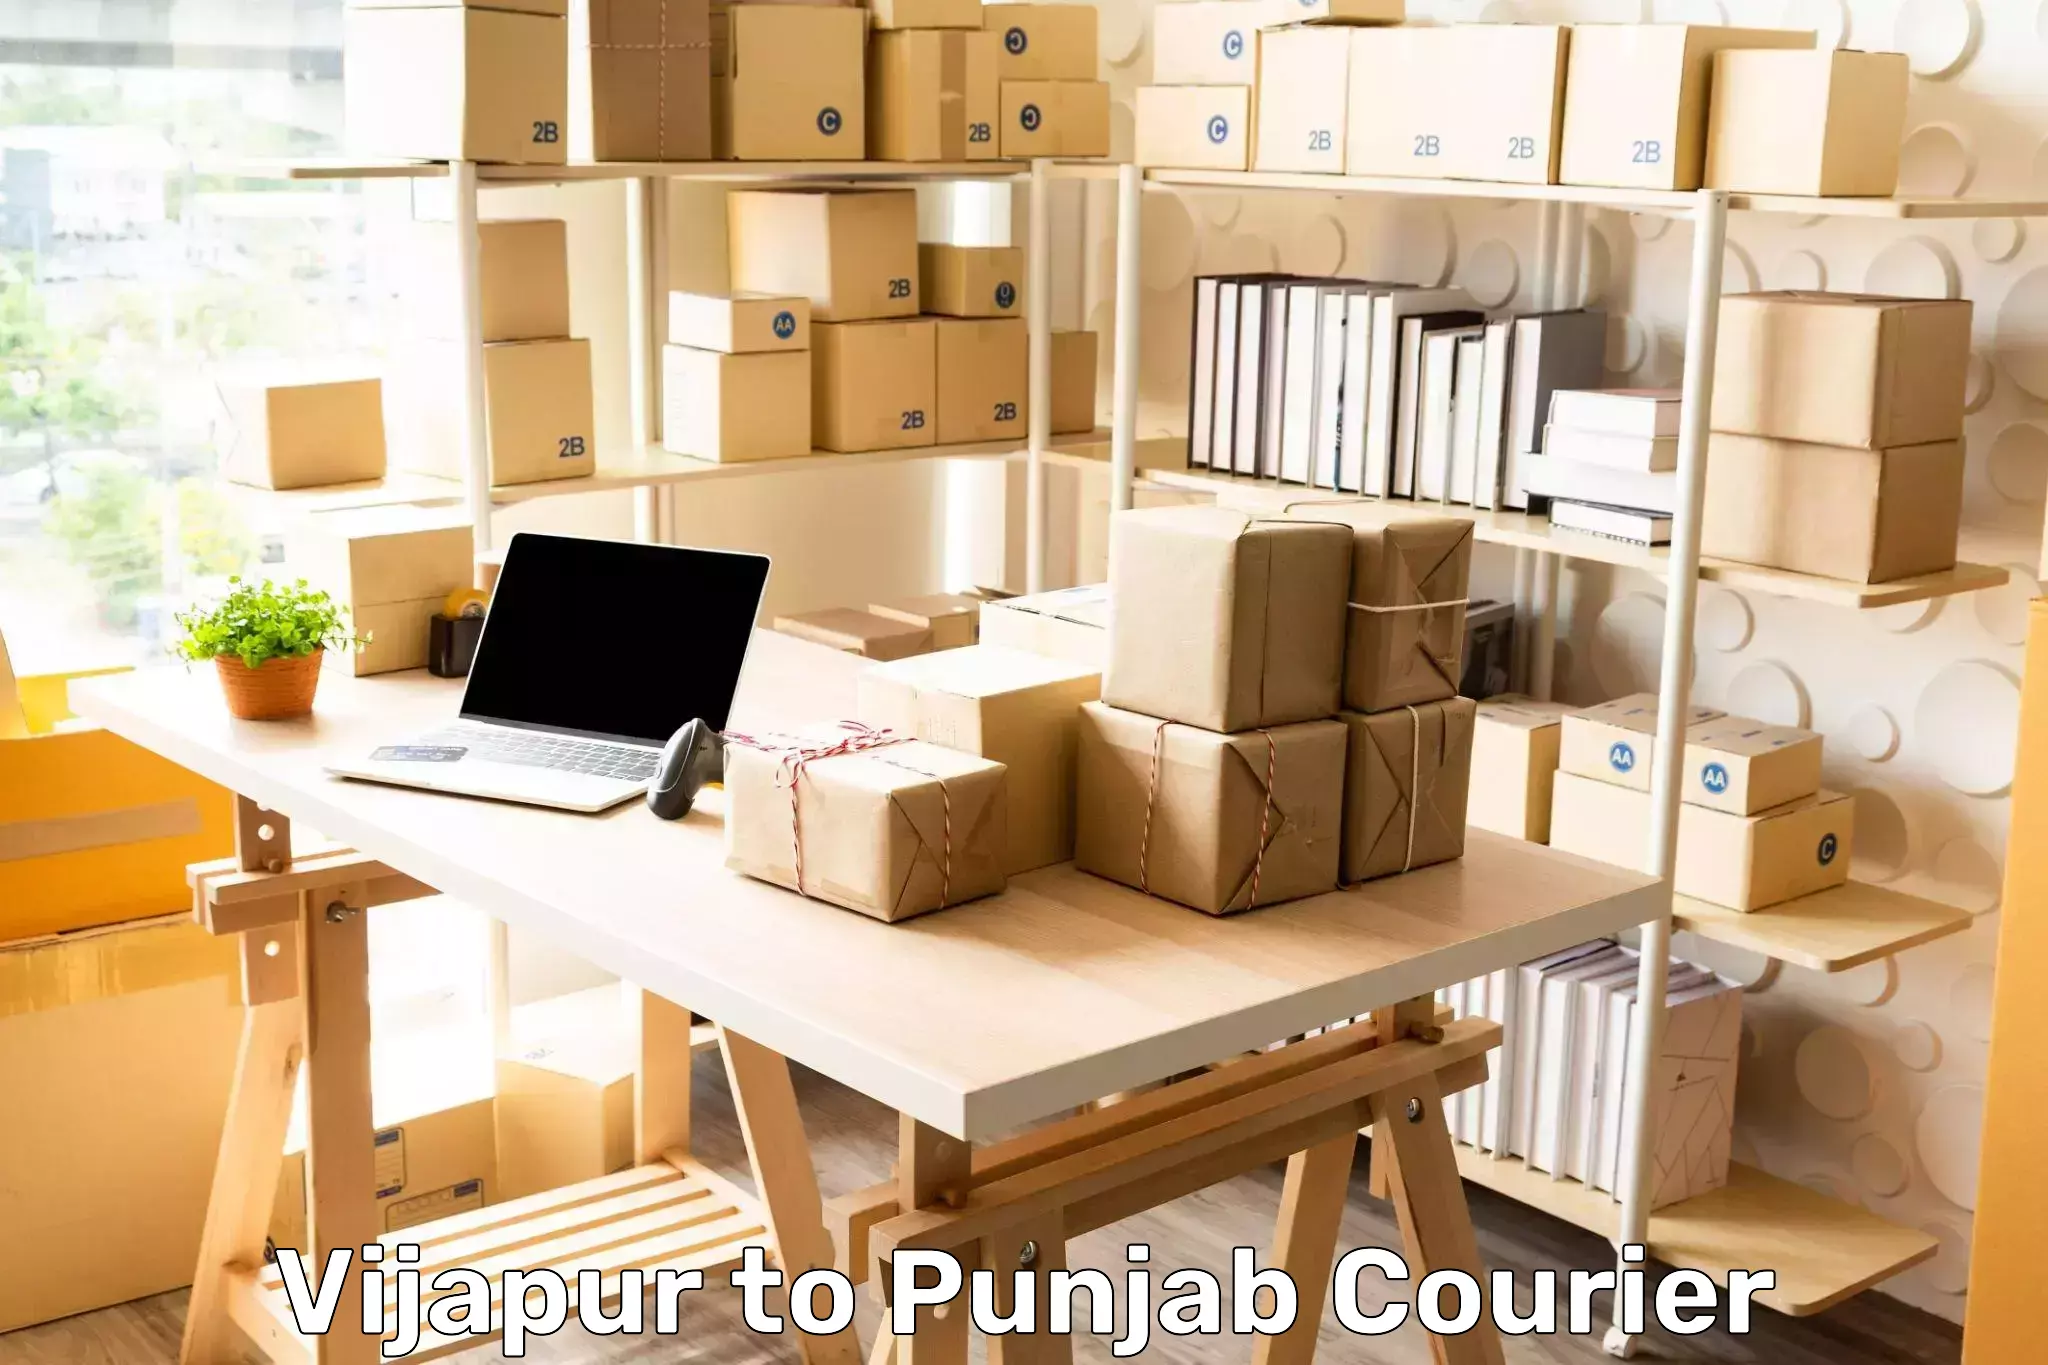 Reliable courier service Vijapur to Punjab